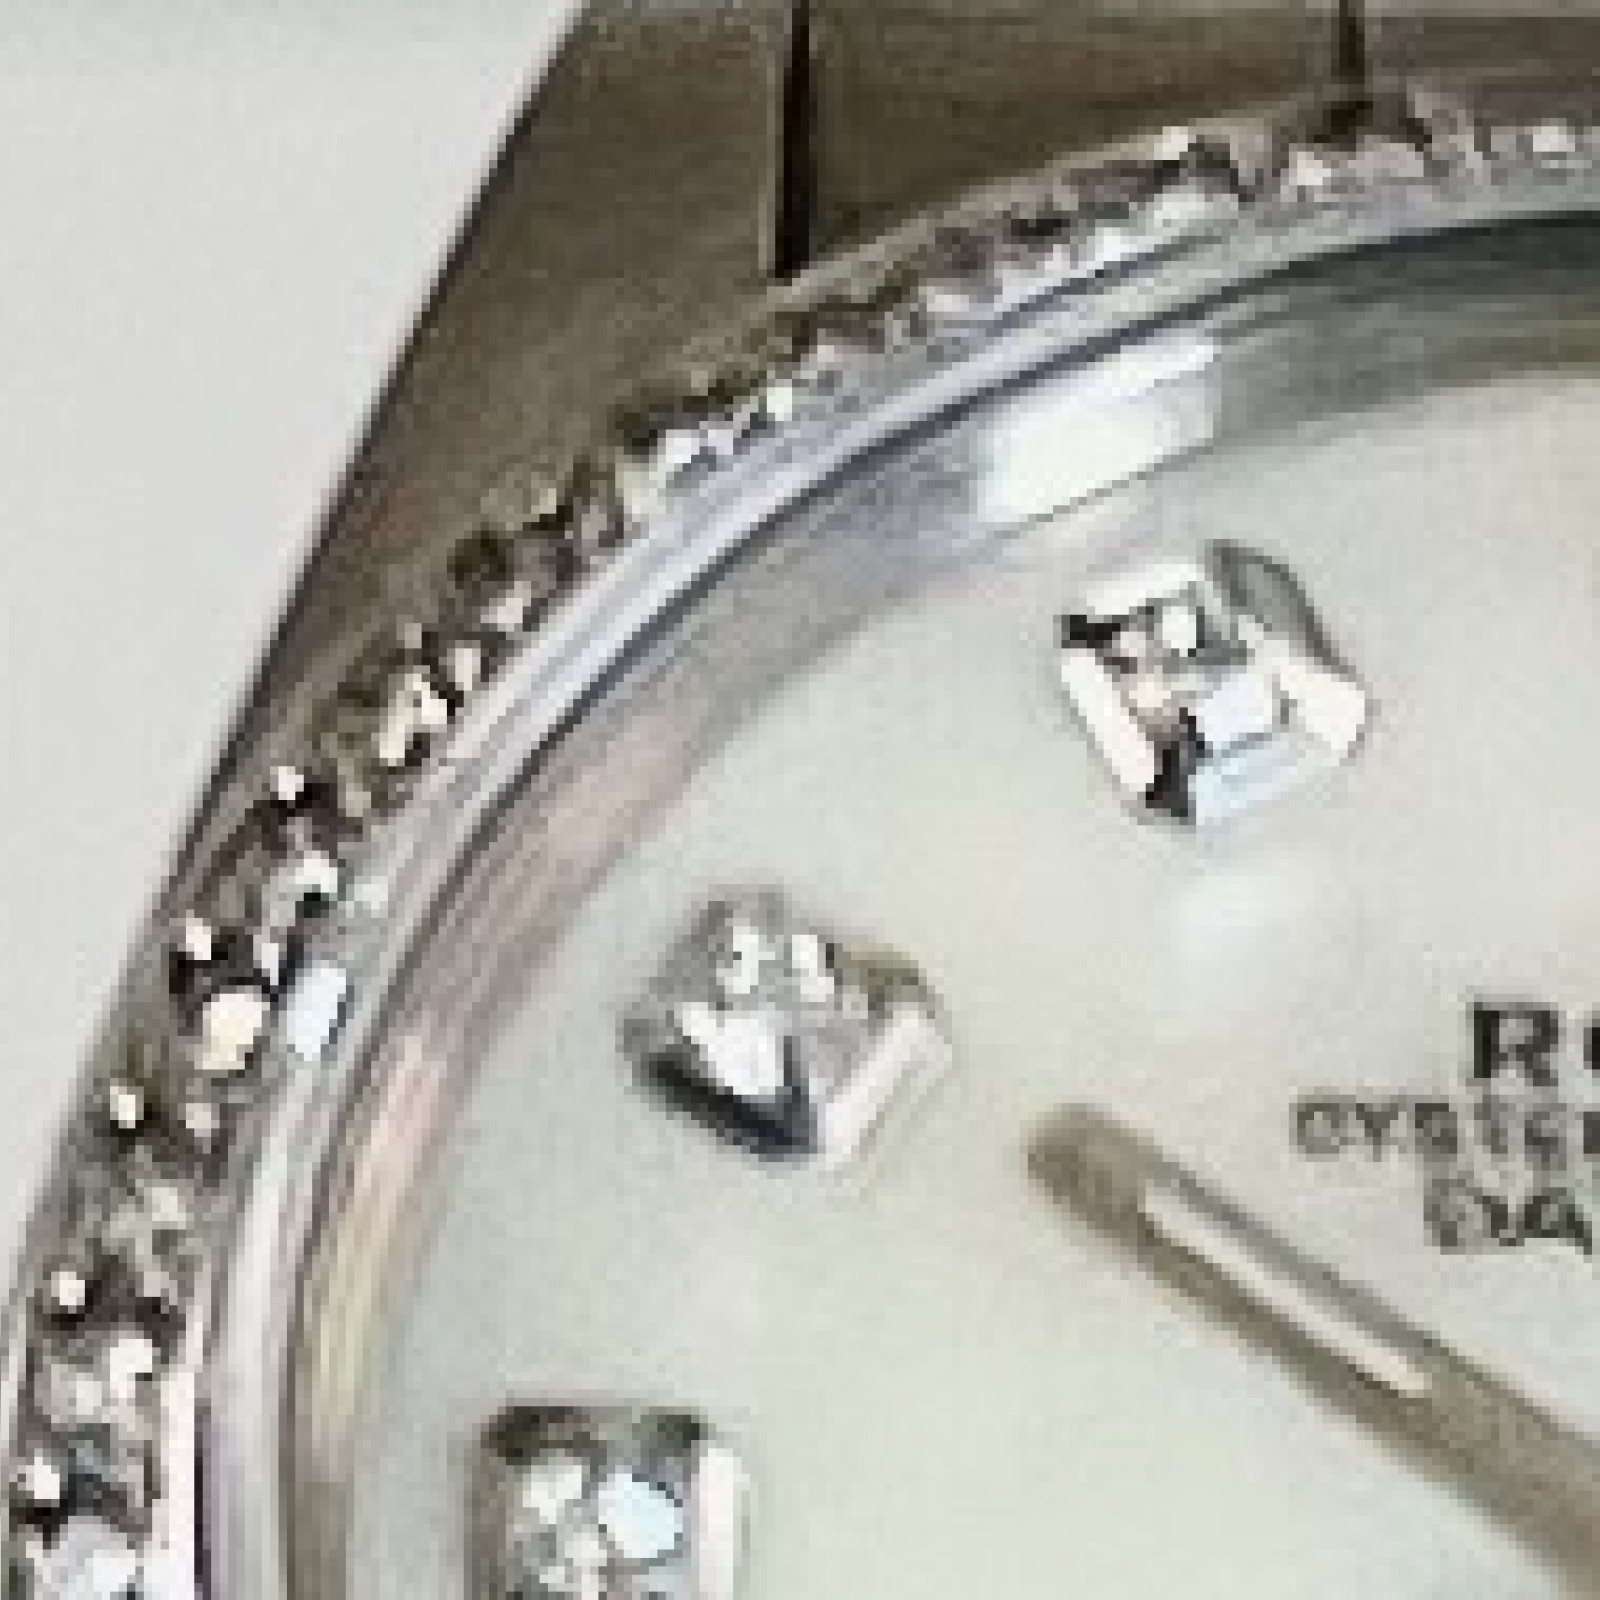 Rolex 78240 Diamond Datejust 31 MM